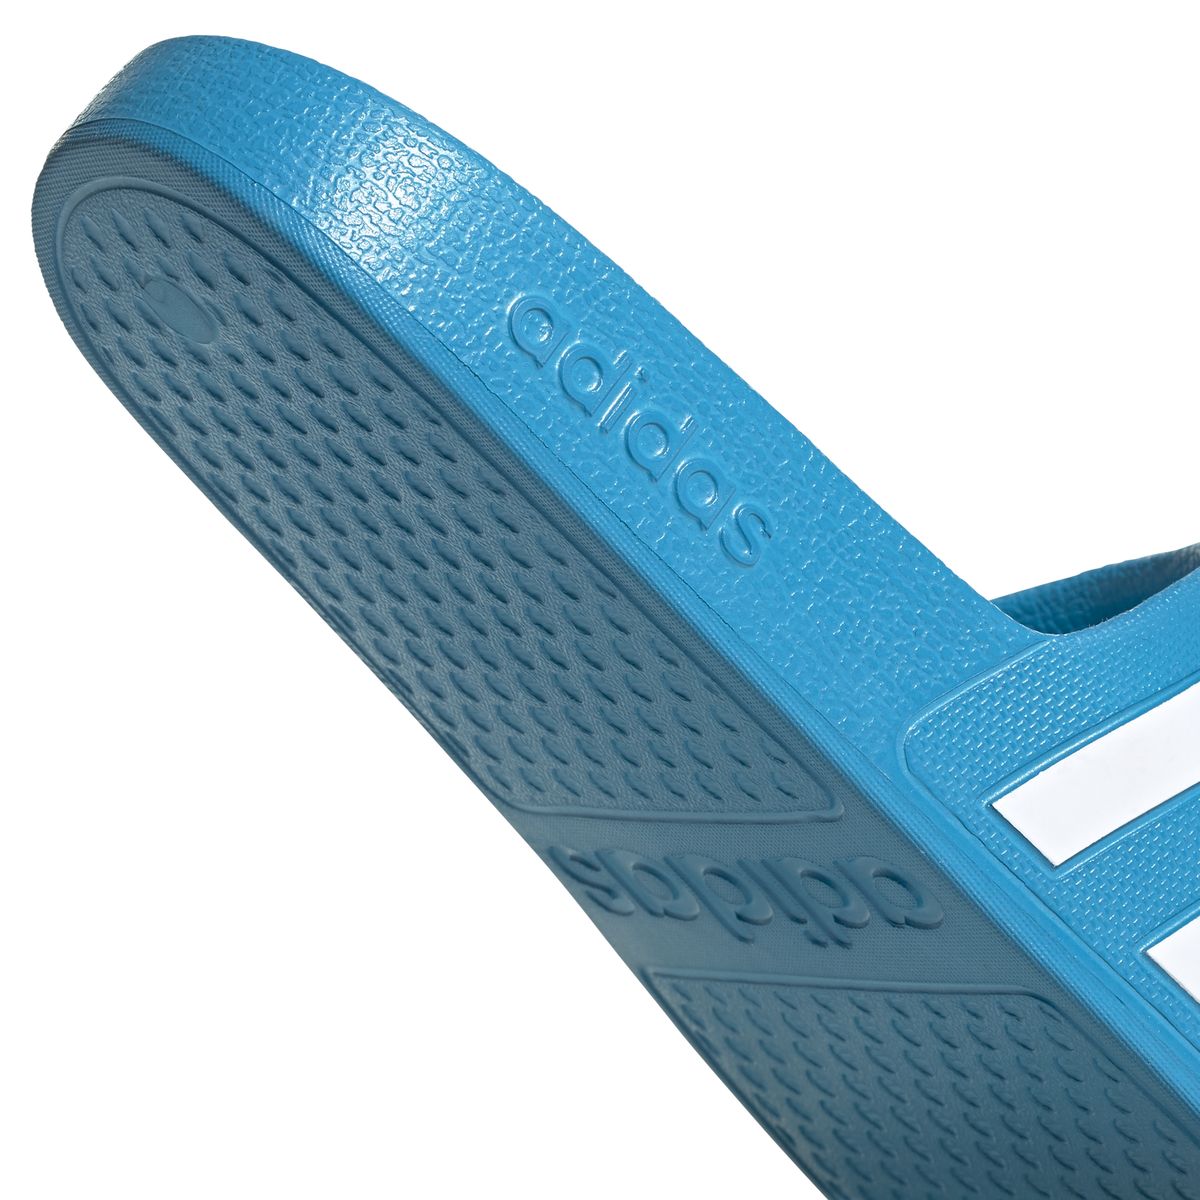 Adidas Aqua adilette Unisex_15